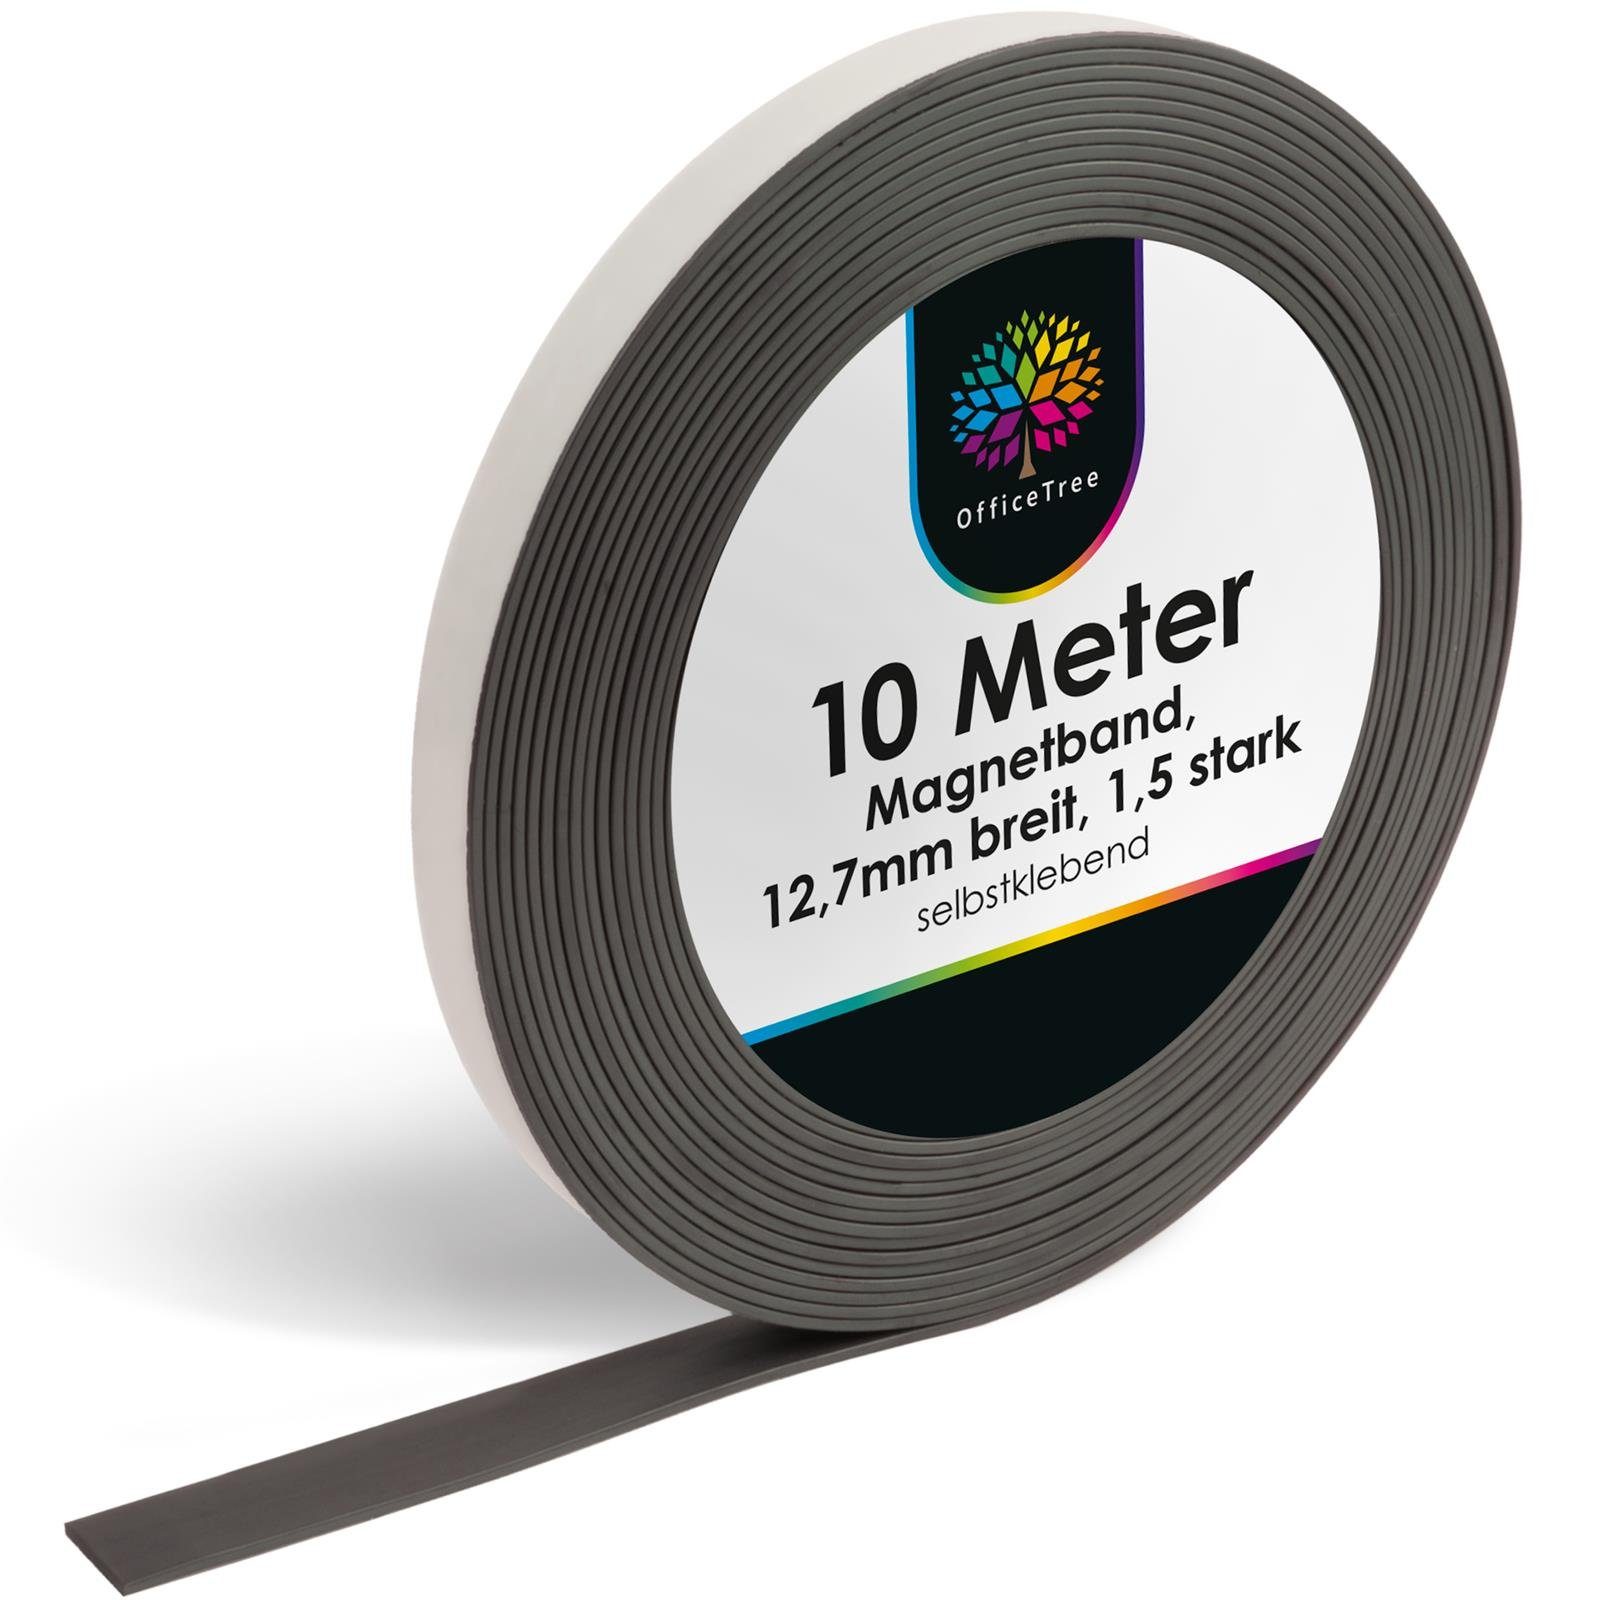 OfficeTree Magnet OfficeTree Magnetband - 10 m - selbstklebend für sichere Magnetisierun, selbstklebend für sichere Magnetisierung von Plakaten Fotos Papier